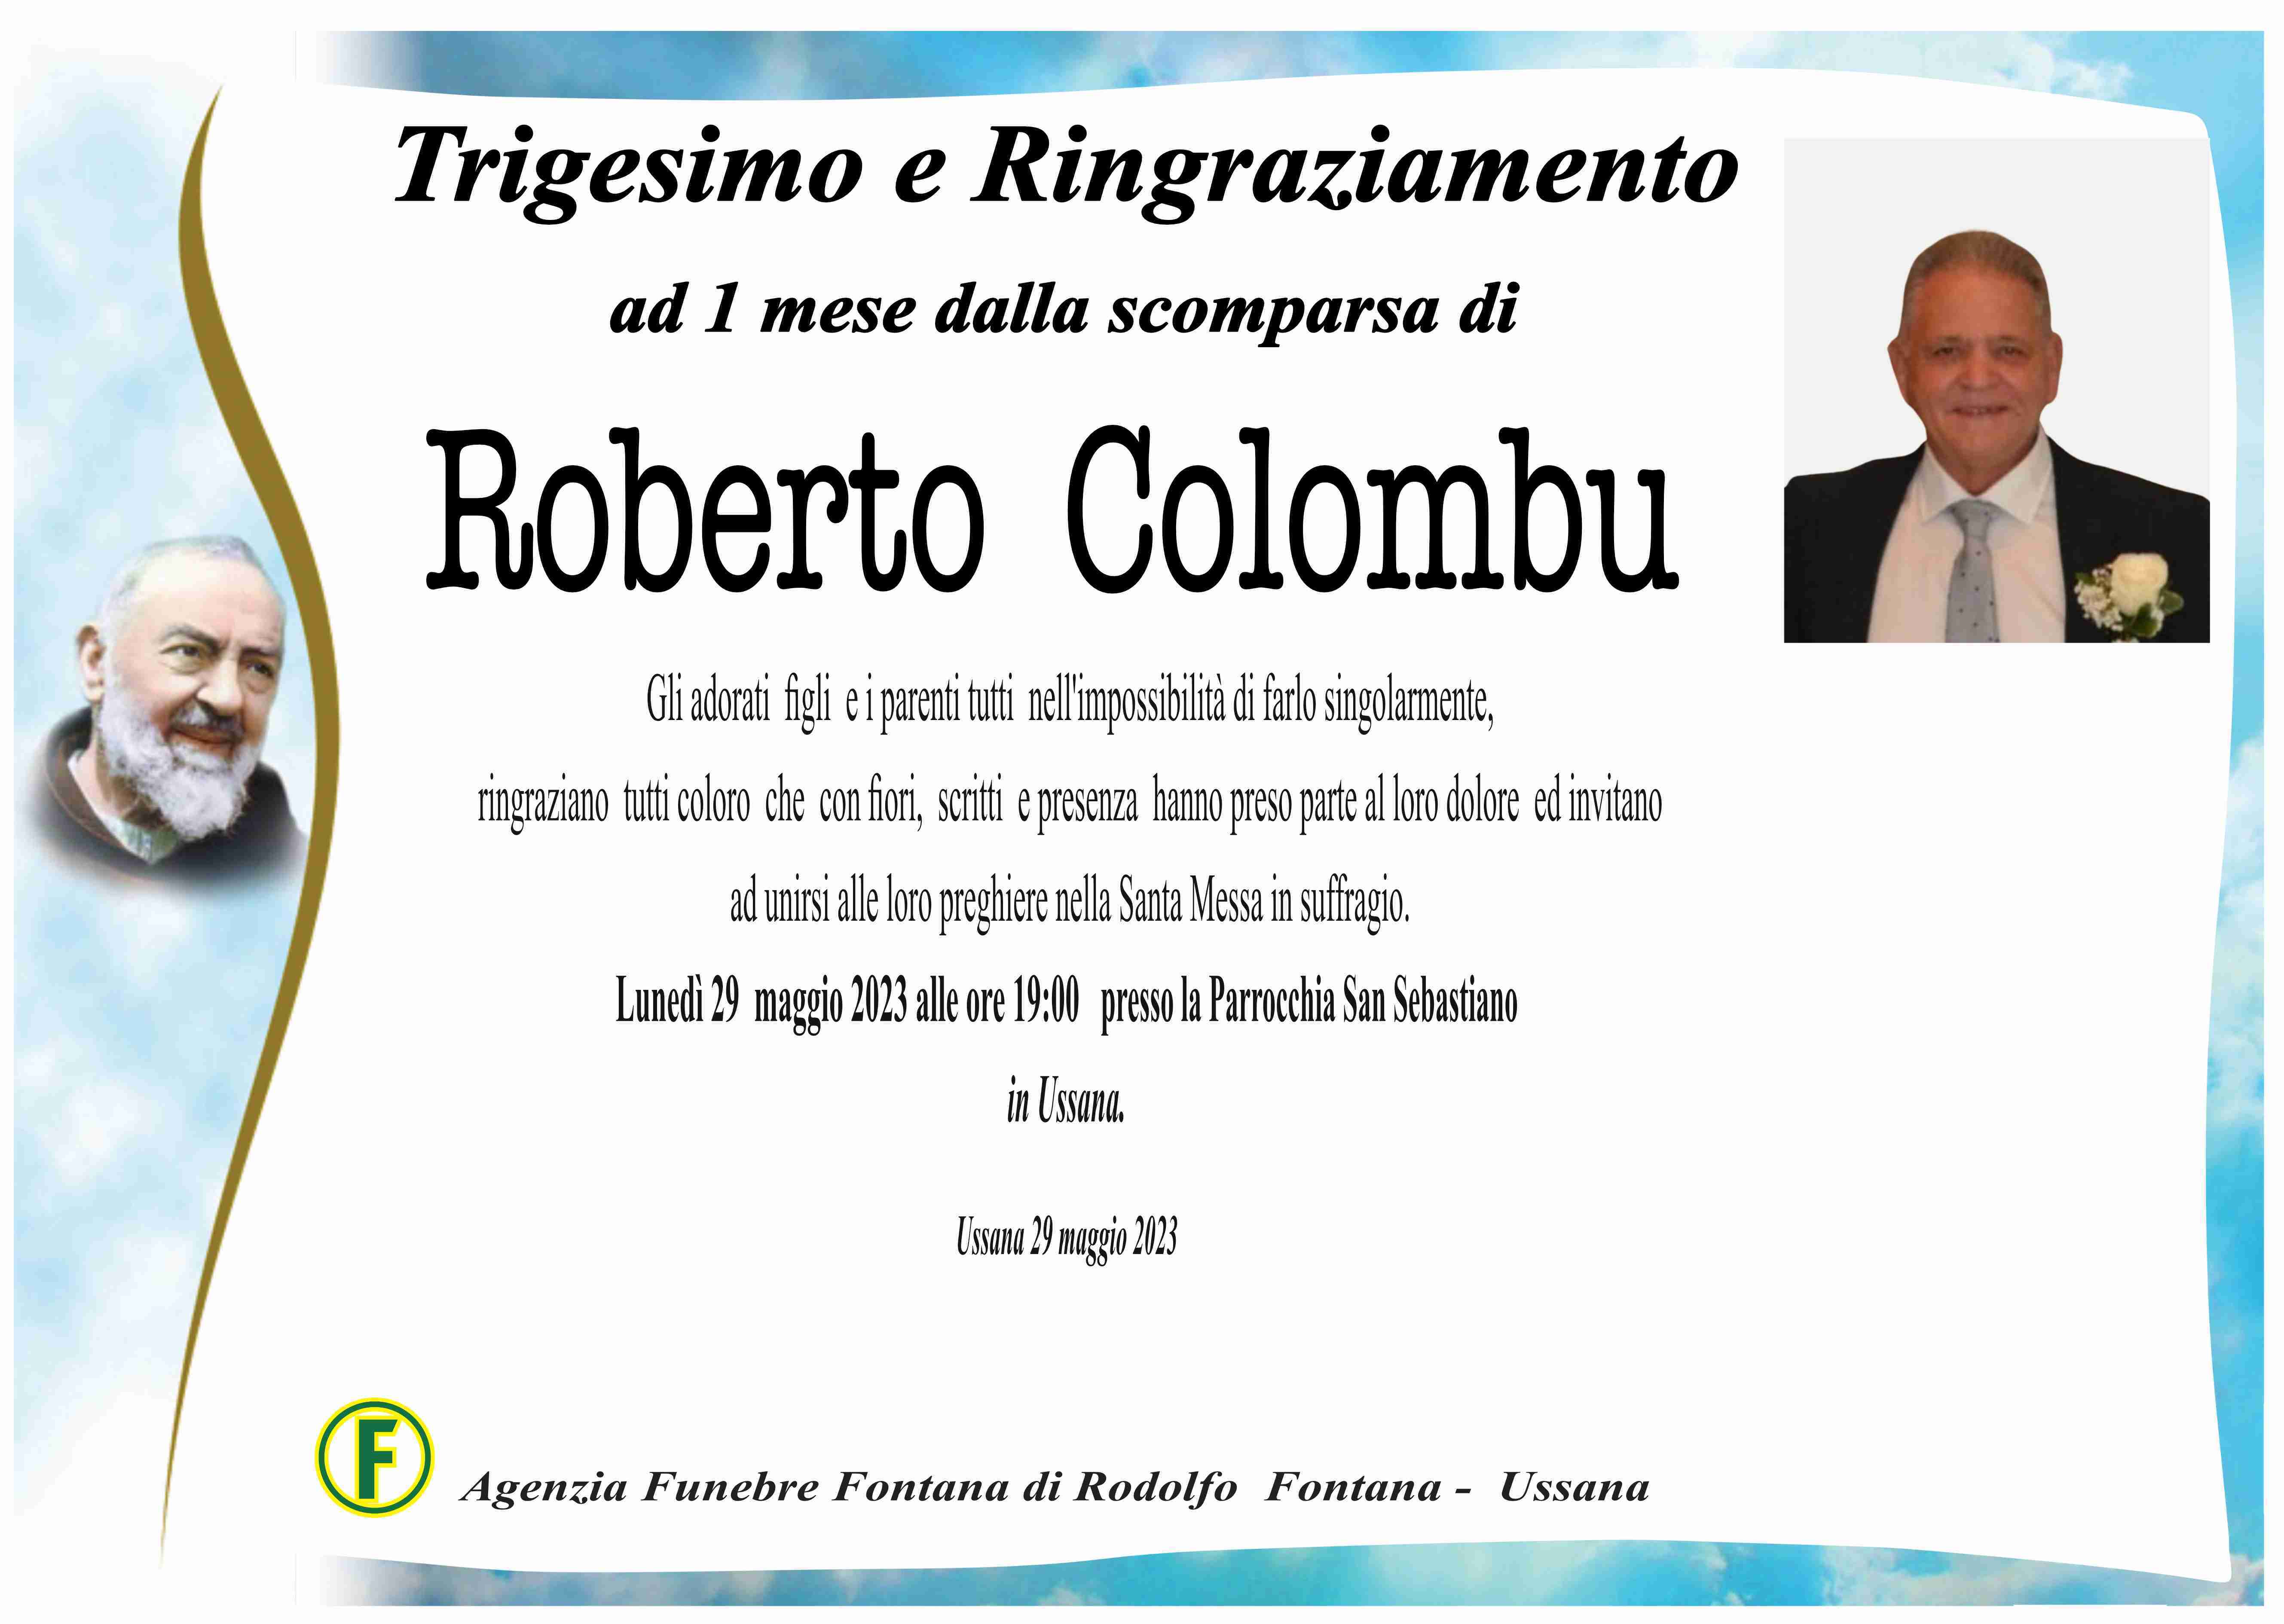 Roberto Colombu